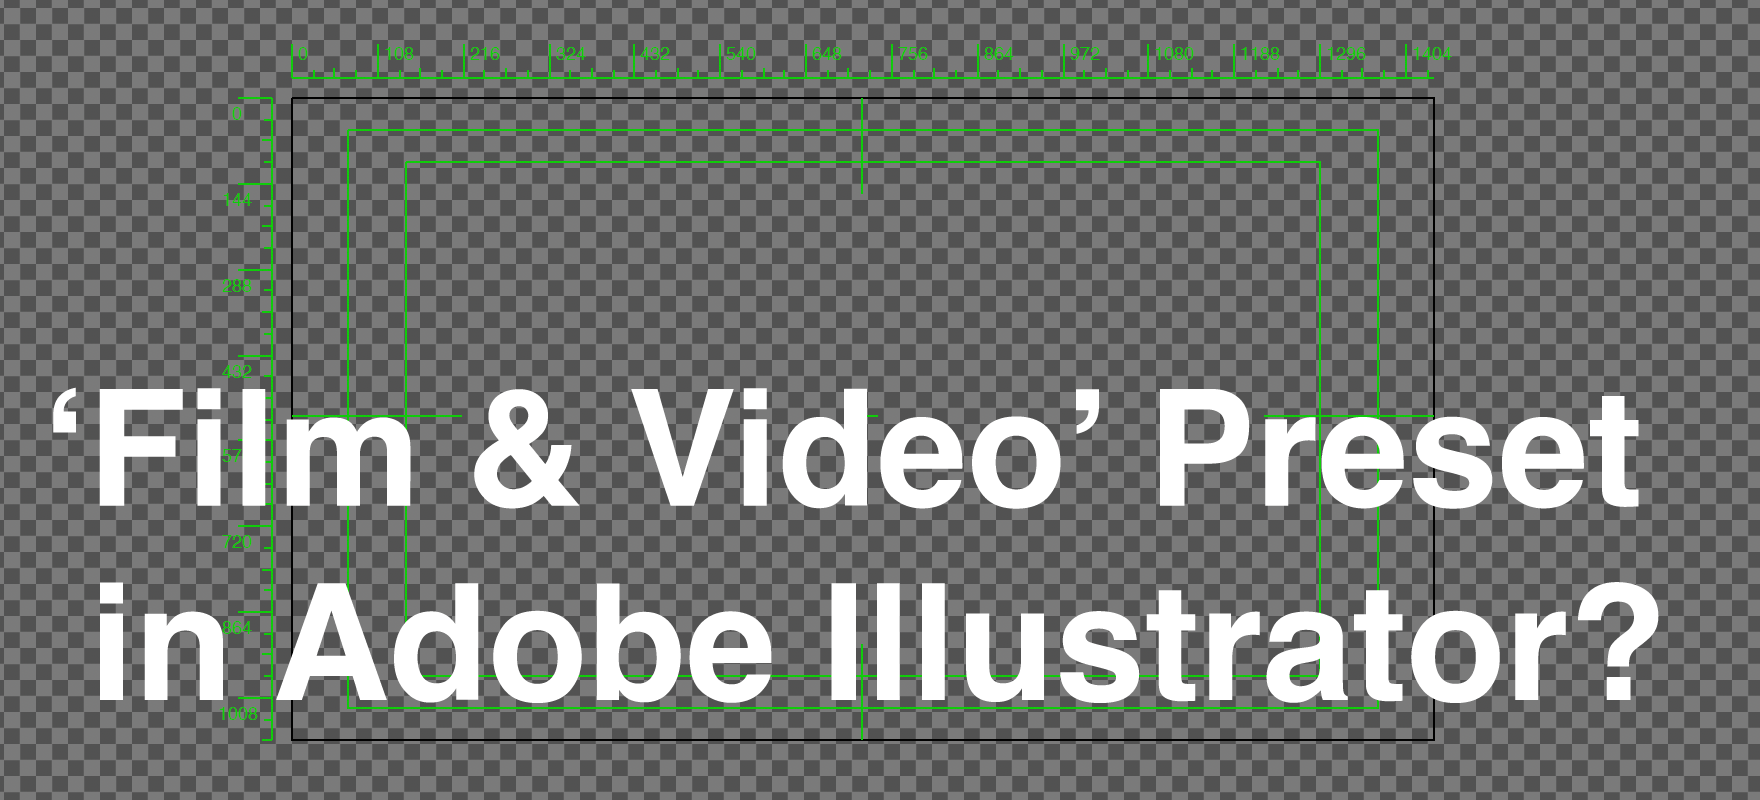 Restoring Adobe Illustrator ‘Film & Video’ Preset to Your Regular Canvas